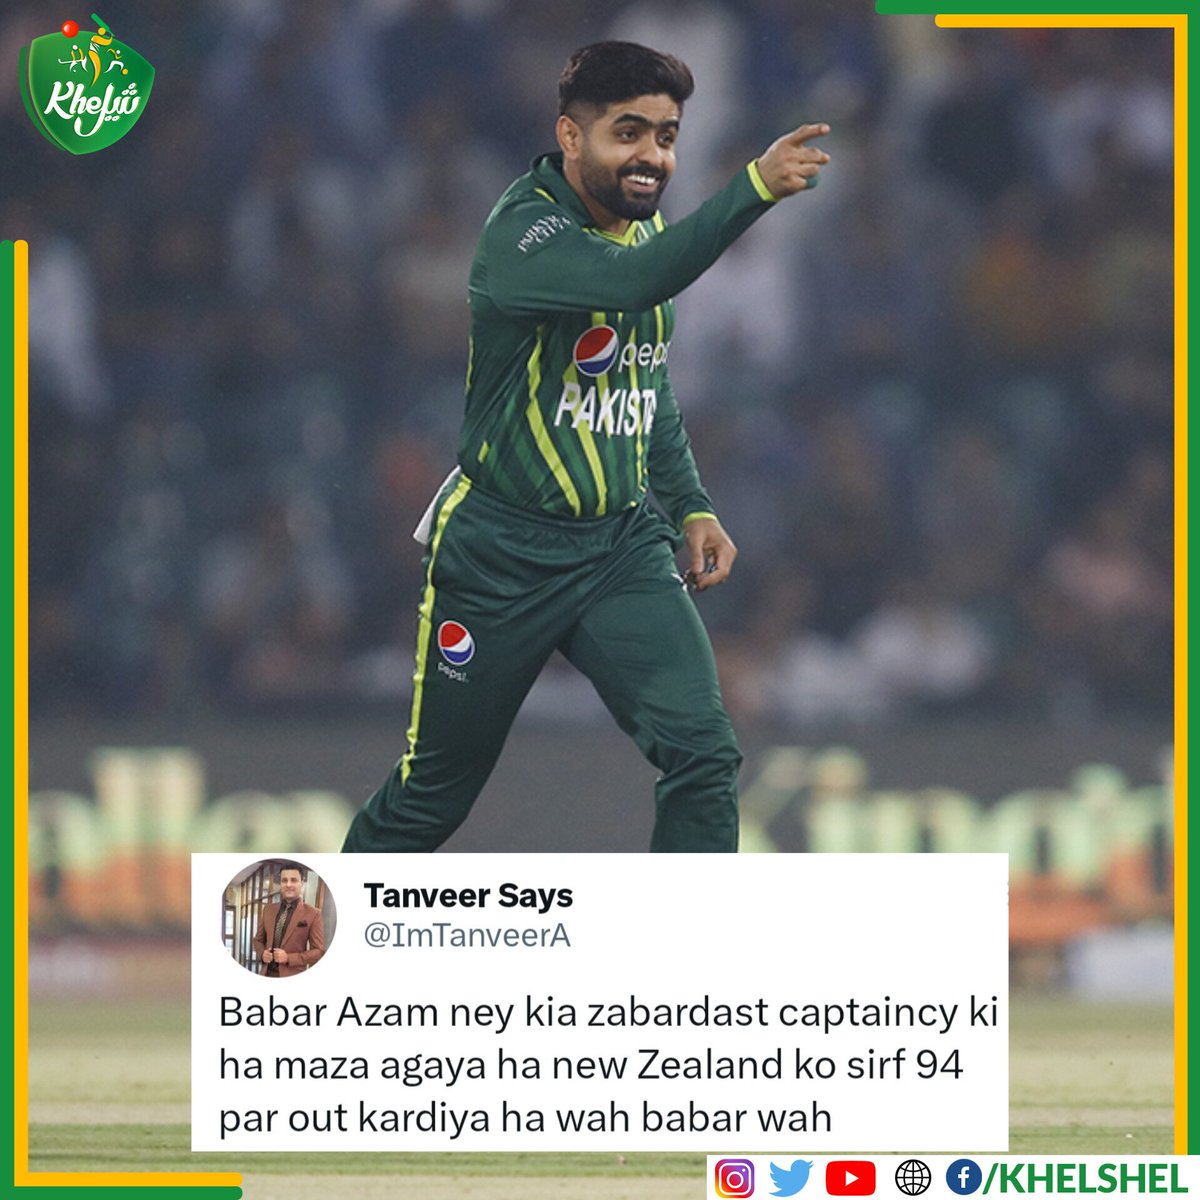 Tanveer Ahmed highly impressed with Babar Azam's captaincy skills 😍

#PAKvNZ | #Cricket | #Pakistan | #InamButt | #BabarAzam𓃵 | #TanveerAhmed | #Lahore